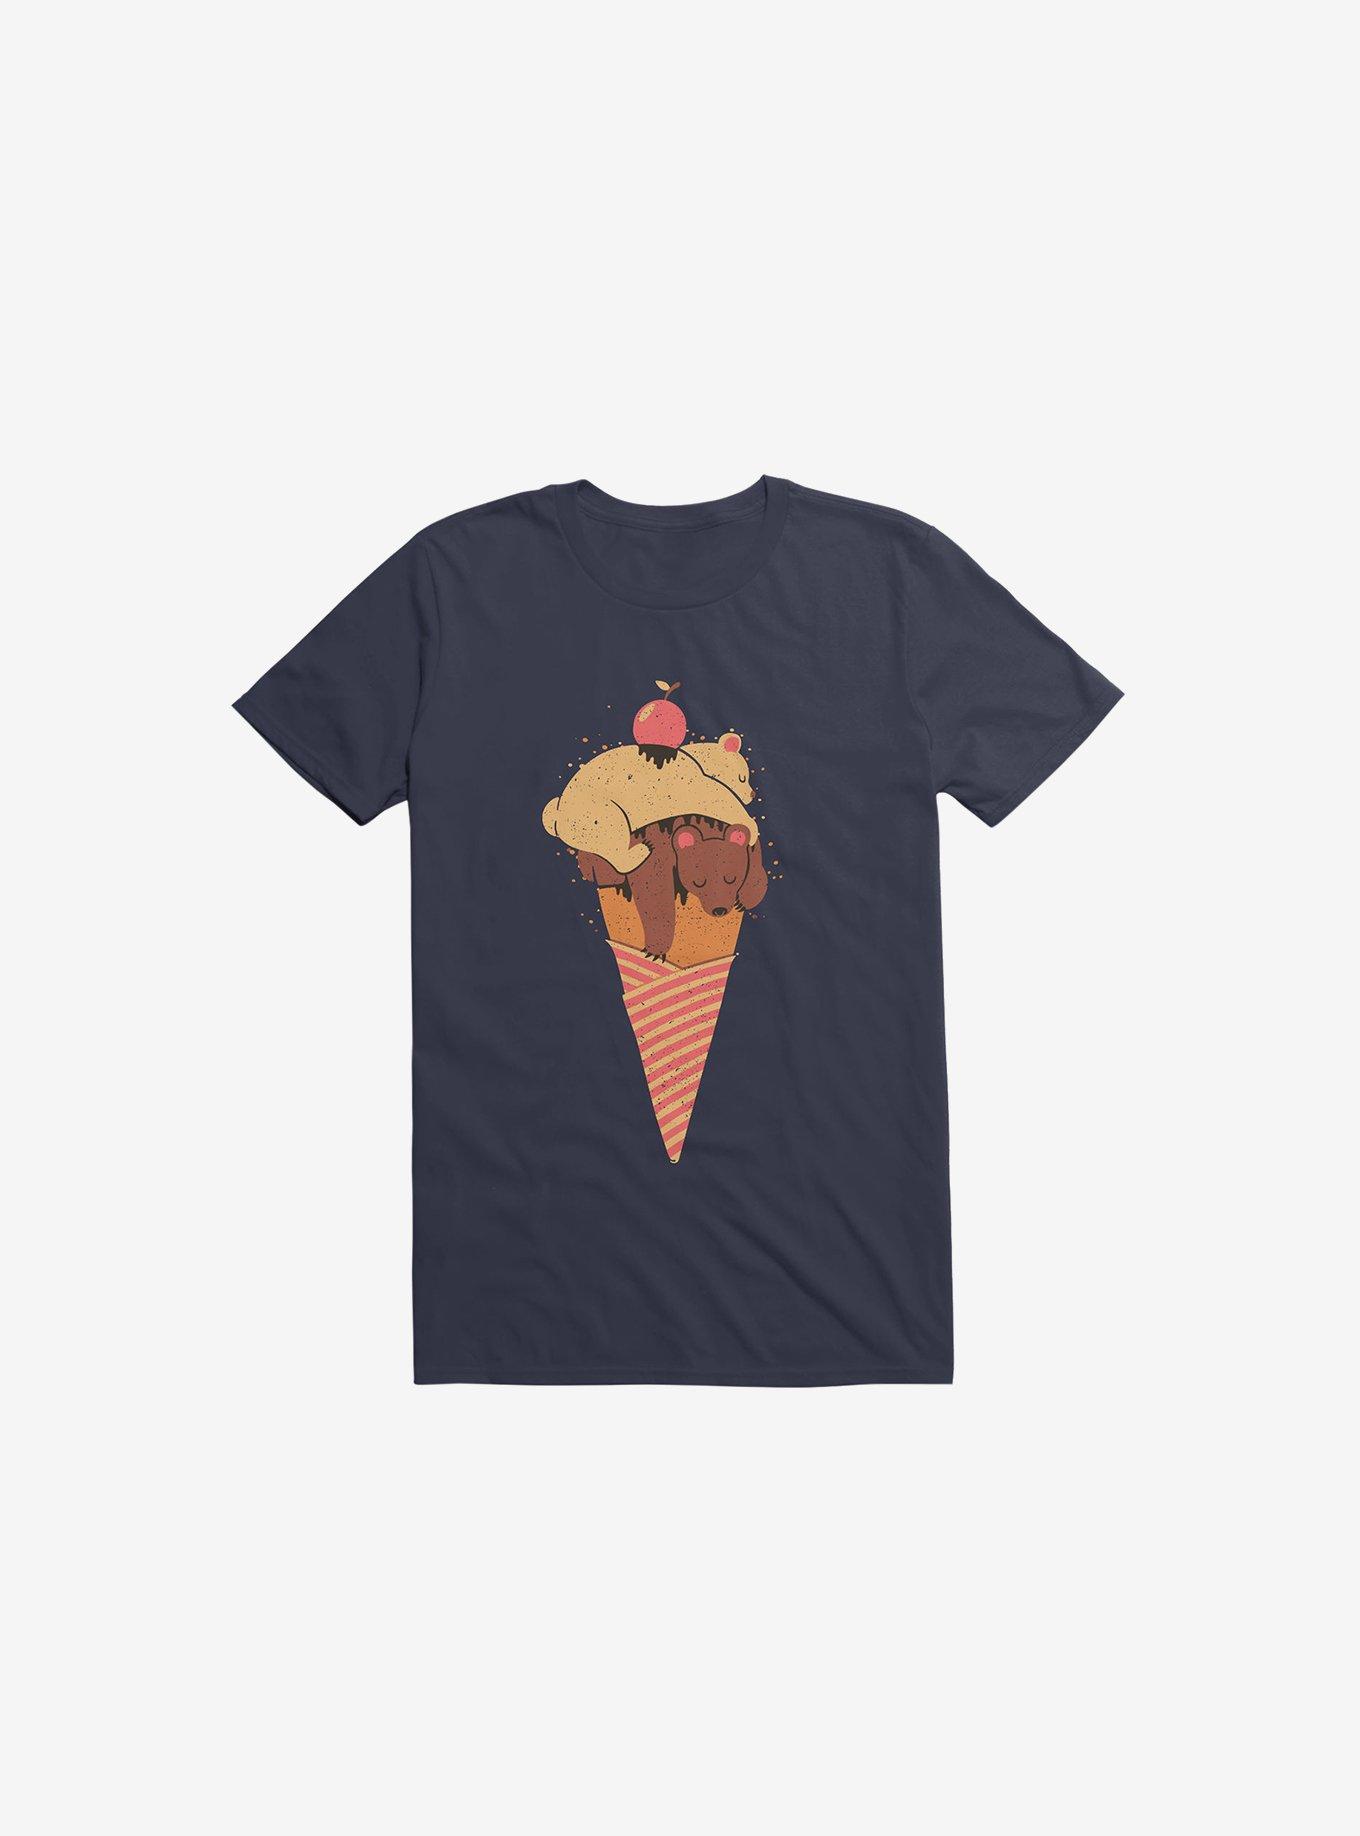 Ice Cream Bears Navy Blue T-Shirt